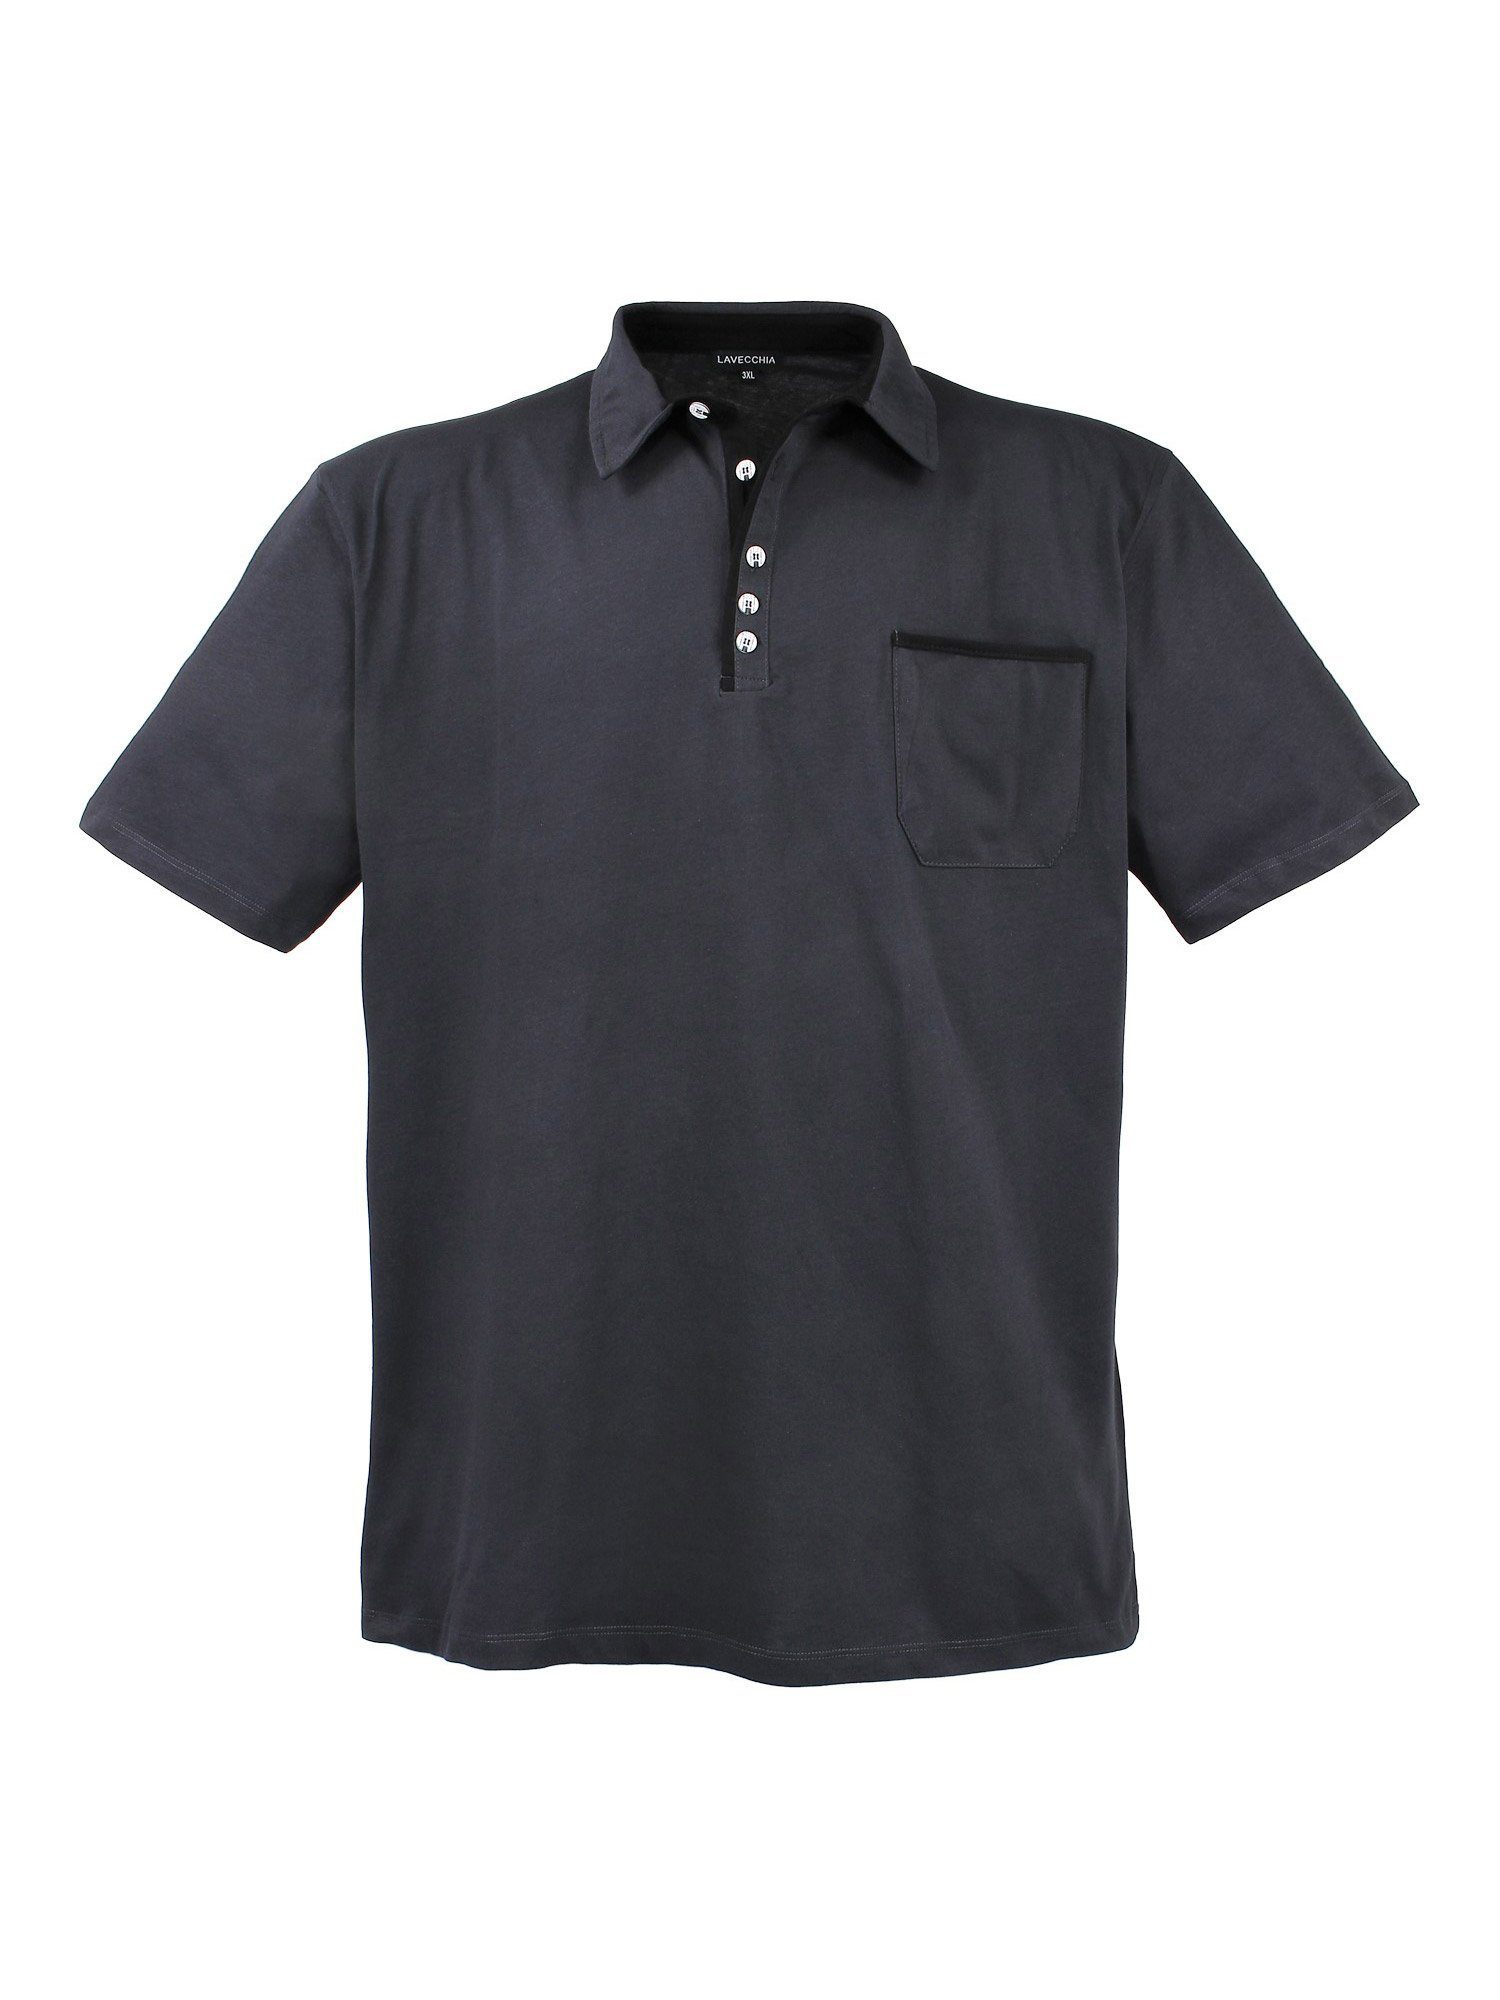 Lavecchia Poloshirt Übergrößen Herren Polo Shirt LV-1701 Herren Polo Shirt anthrazit